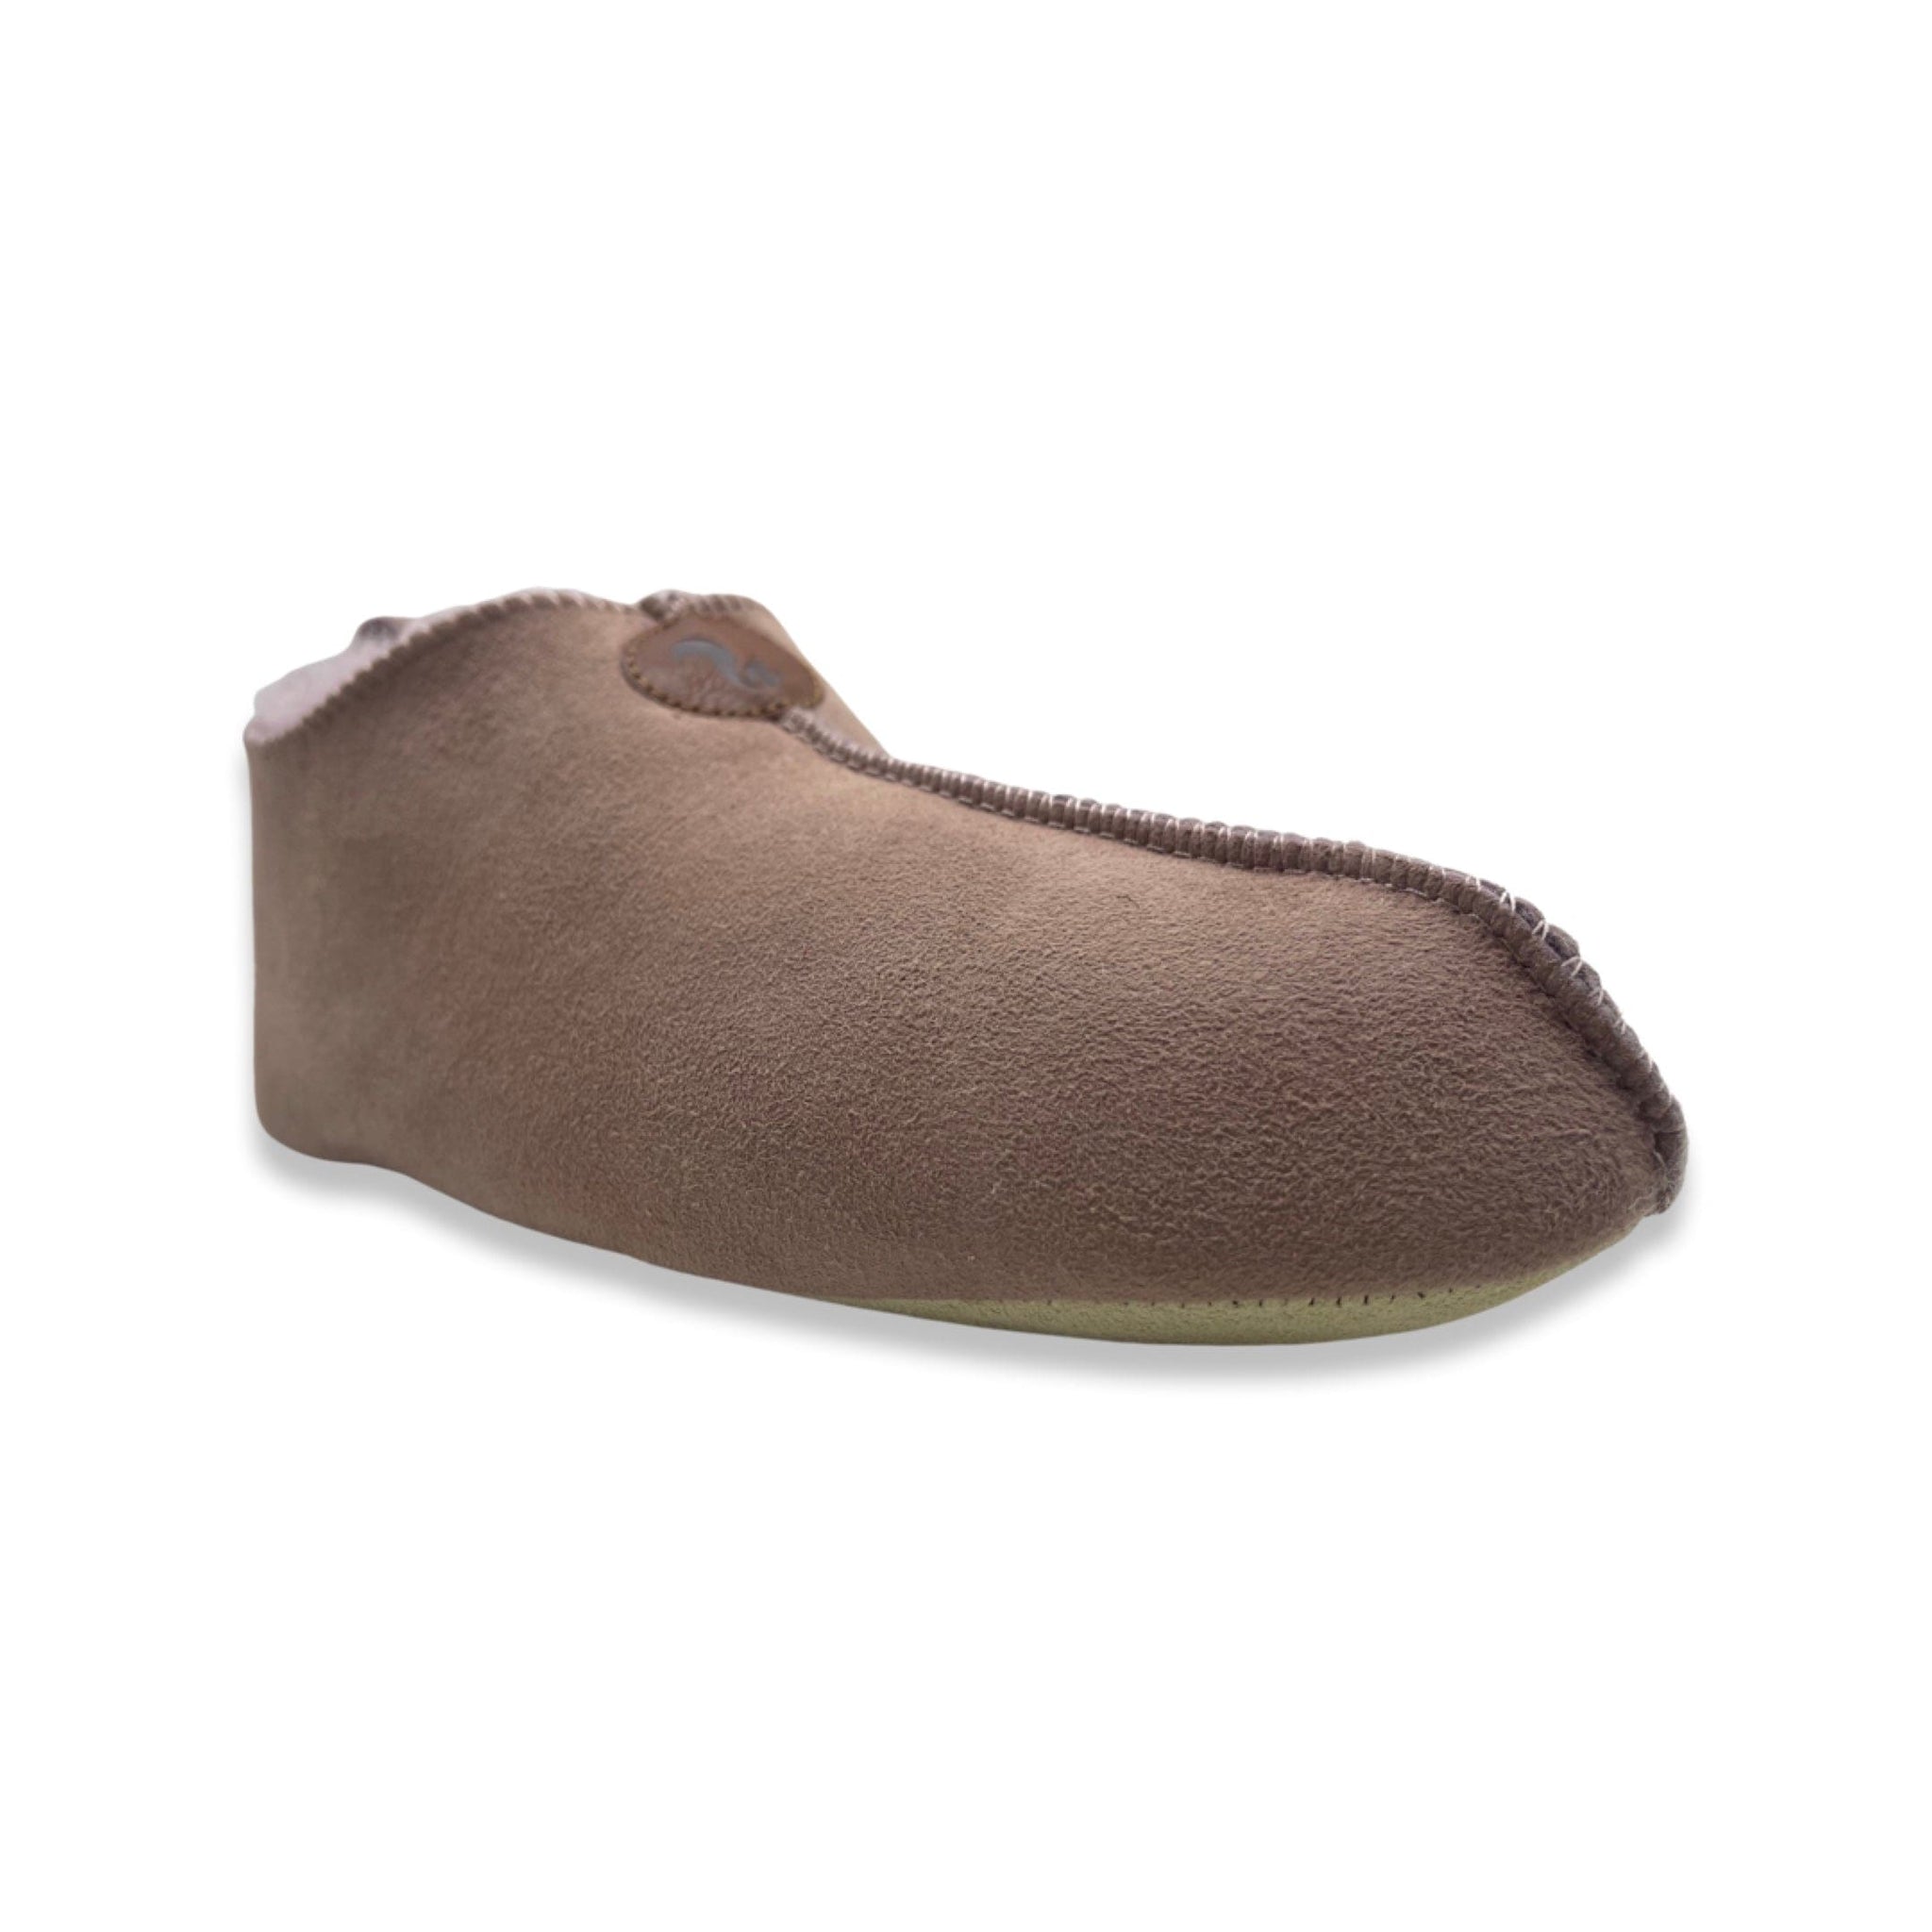 NAT 2 calzado thies 1856 ® Sheep Slipper Boot new pink (W) moda sostenible moda ética